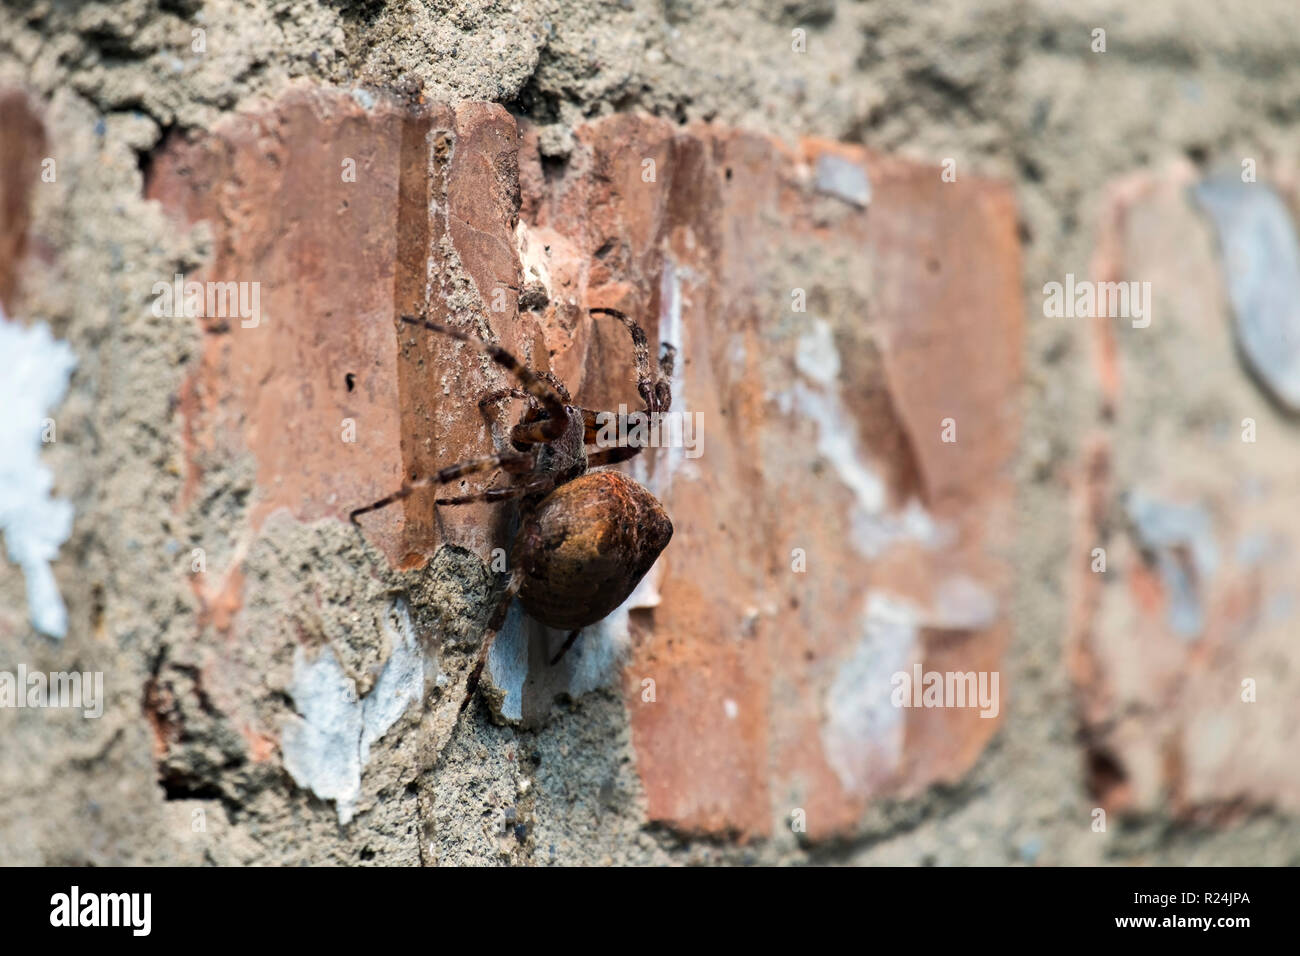 Araña de Jardín Europeo sentado en un muro de ladrillo (Araneus diadematus) Foto de stock